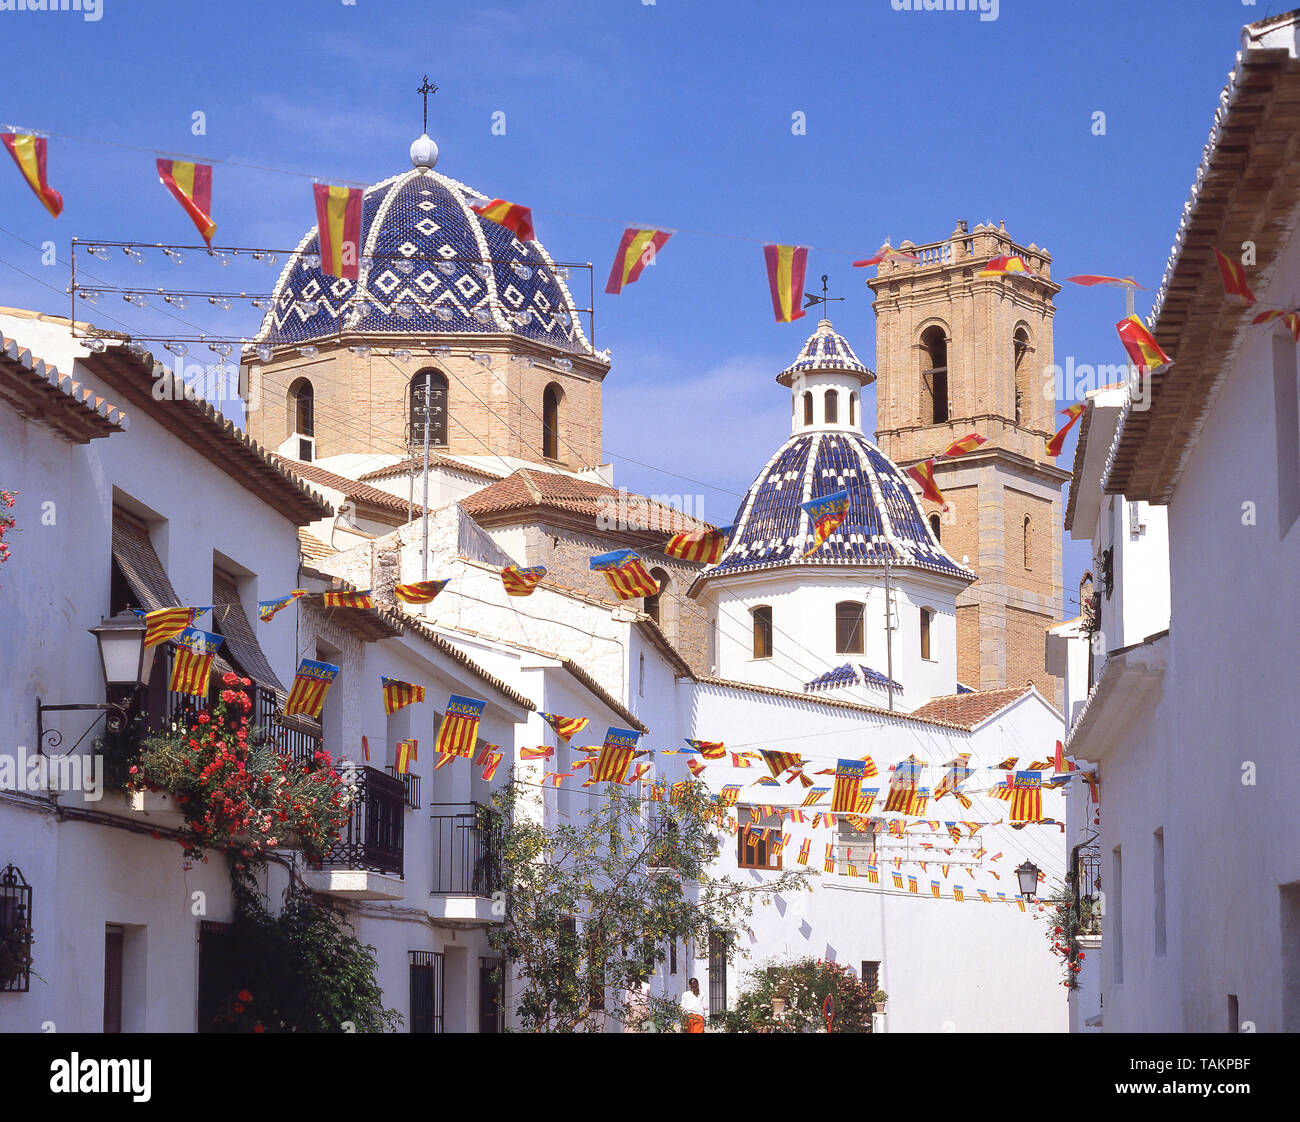 La Mare de Deu del Consol (Our Lady of Solace) Church, Altea, Costa Blanca, Alicante Province, Kingdom of Spain Stock Photo